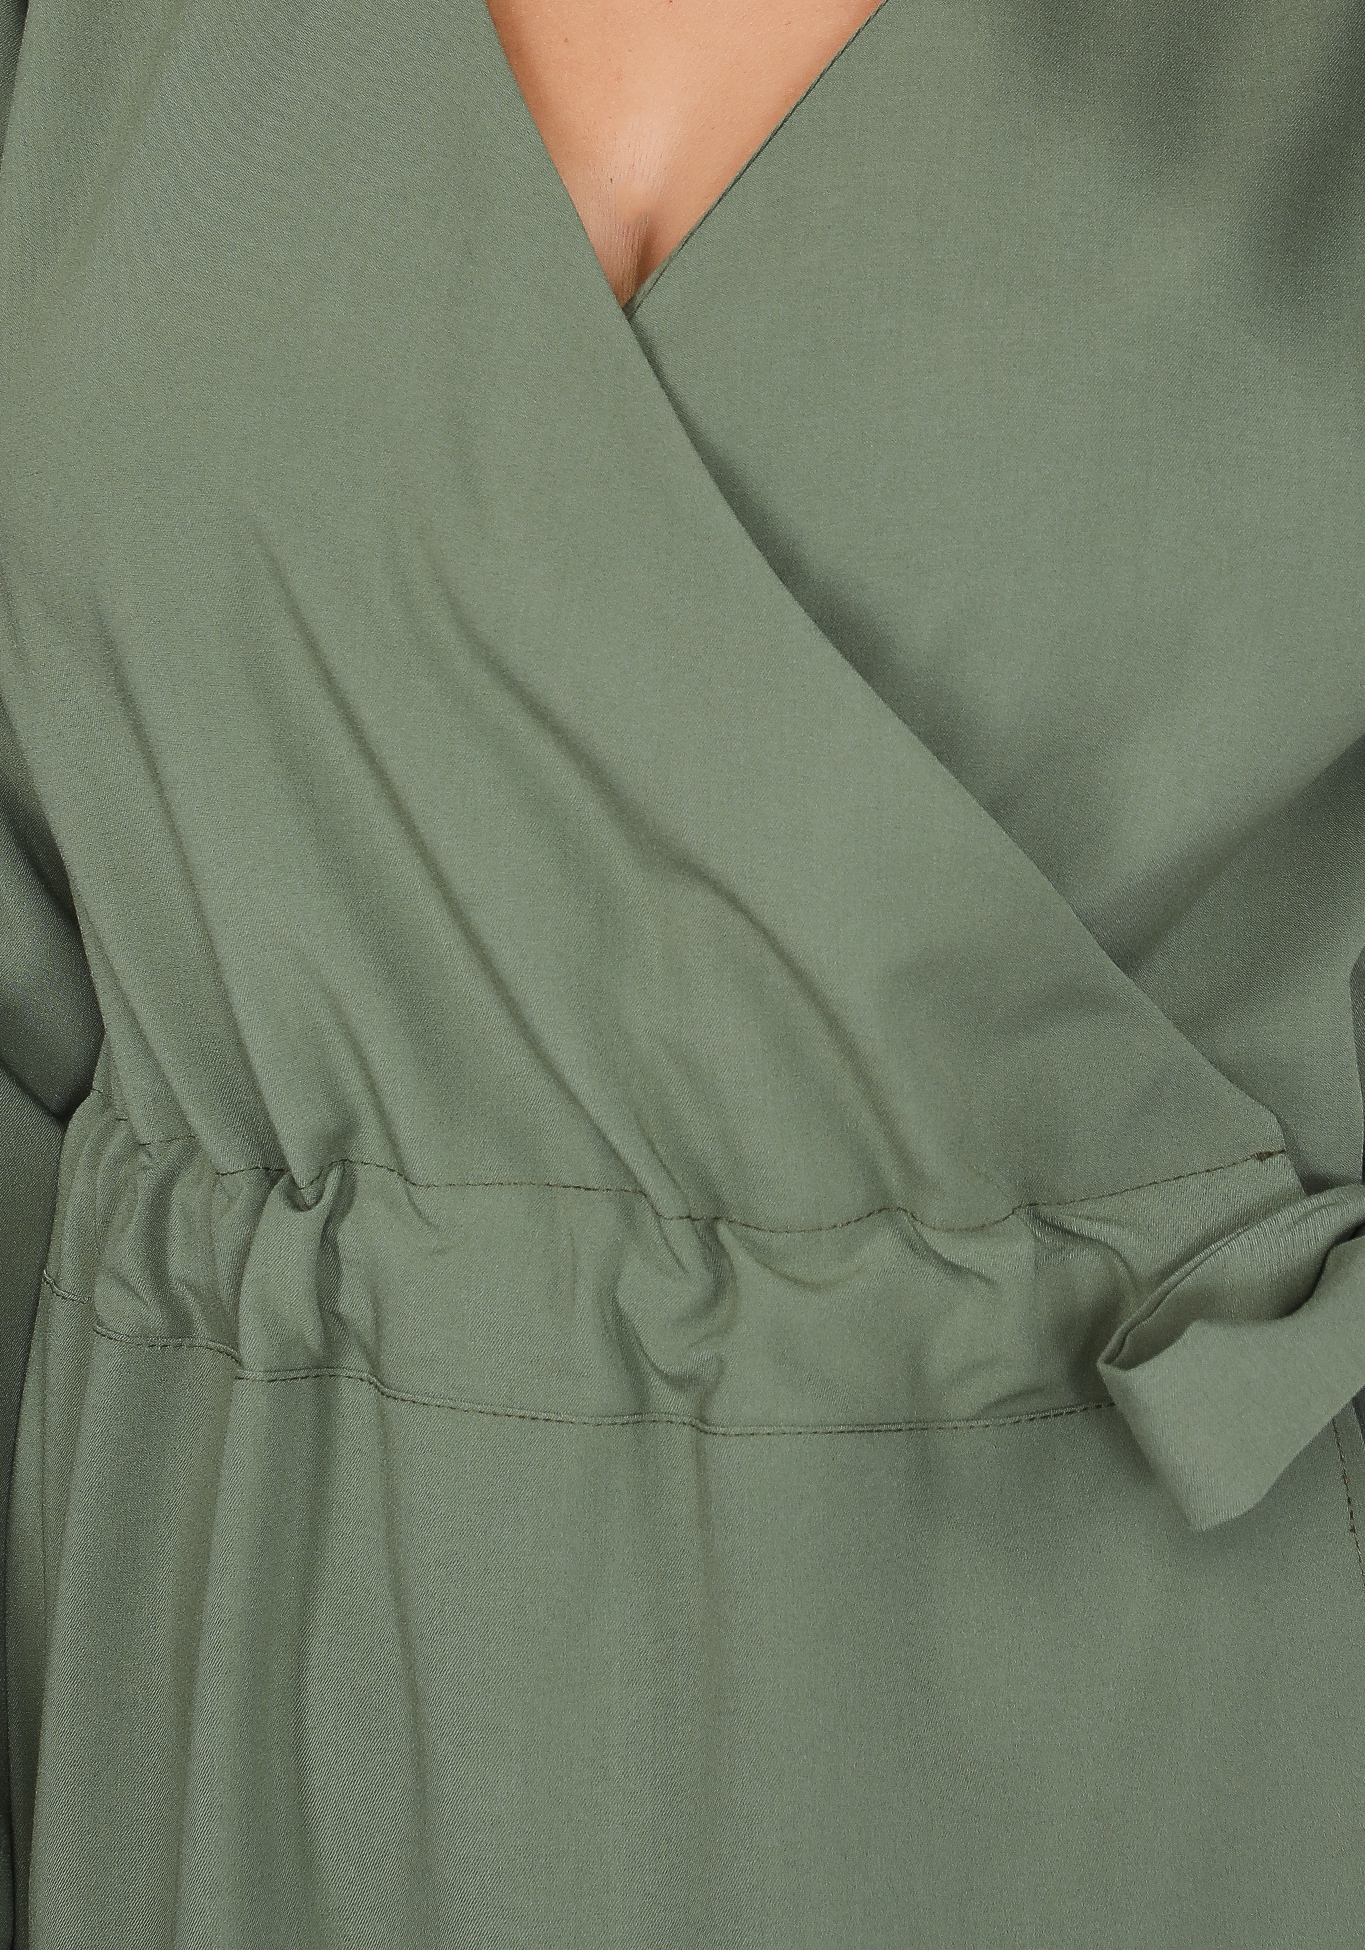 Платье на запах с кулиской на талии Polina Romanova, размер 48, цвет хаки с запахом - фото 8